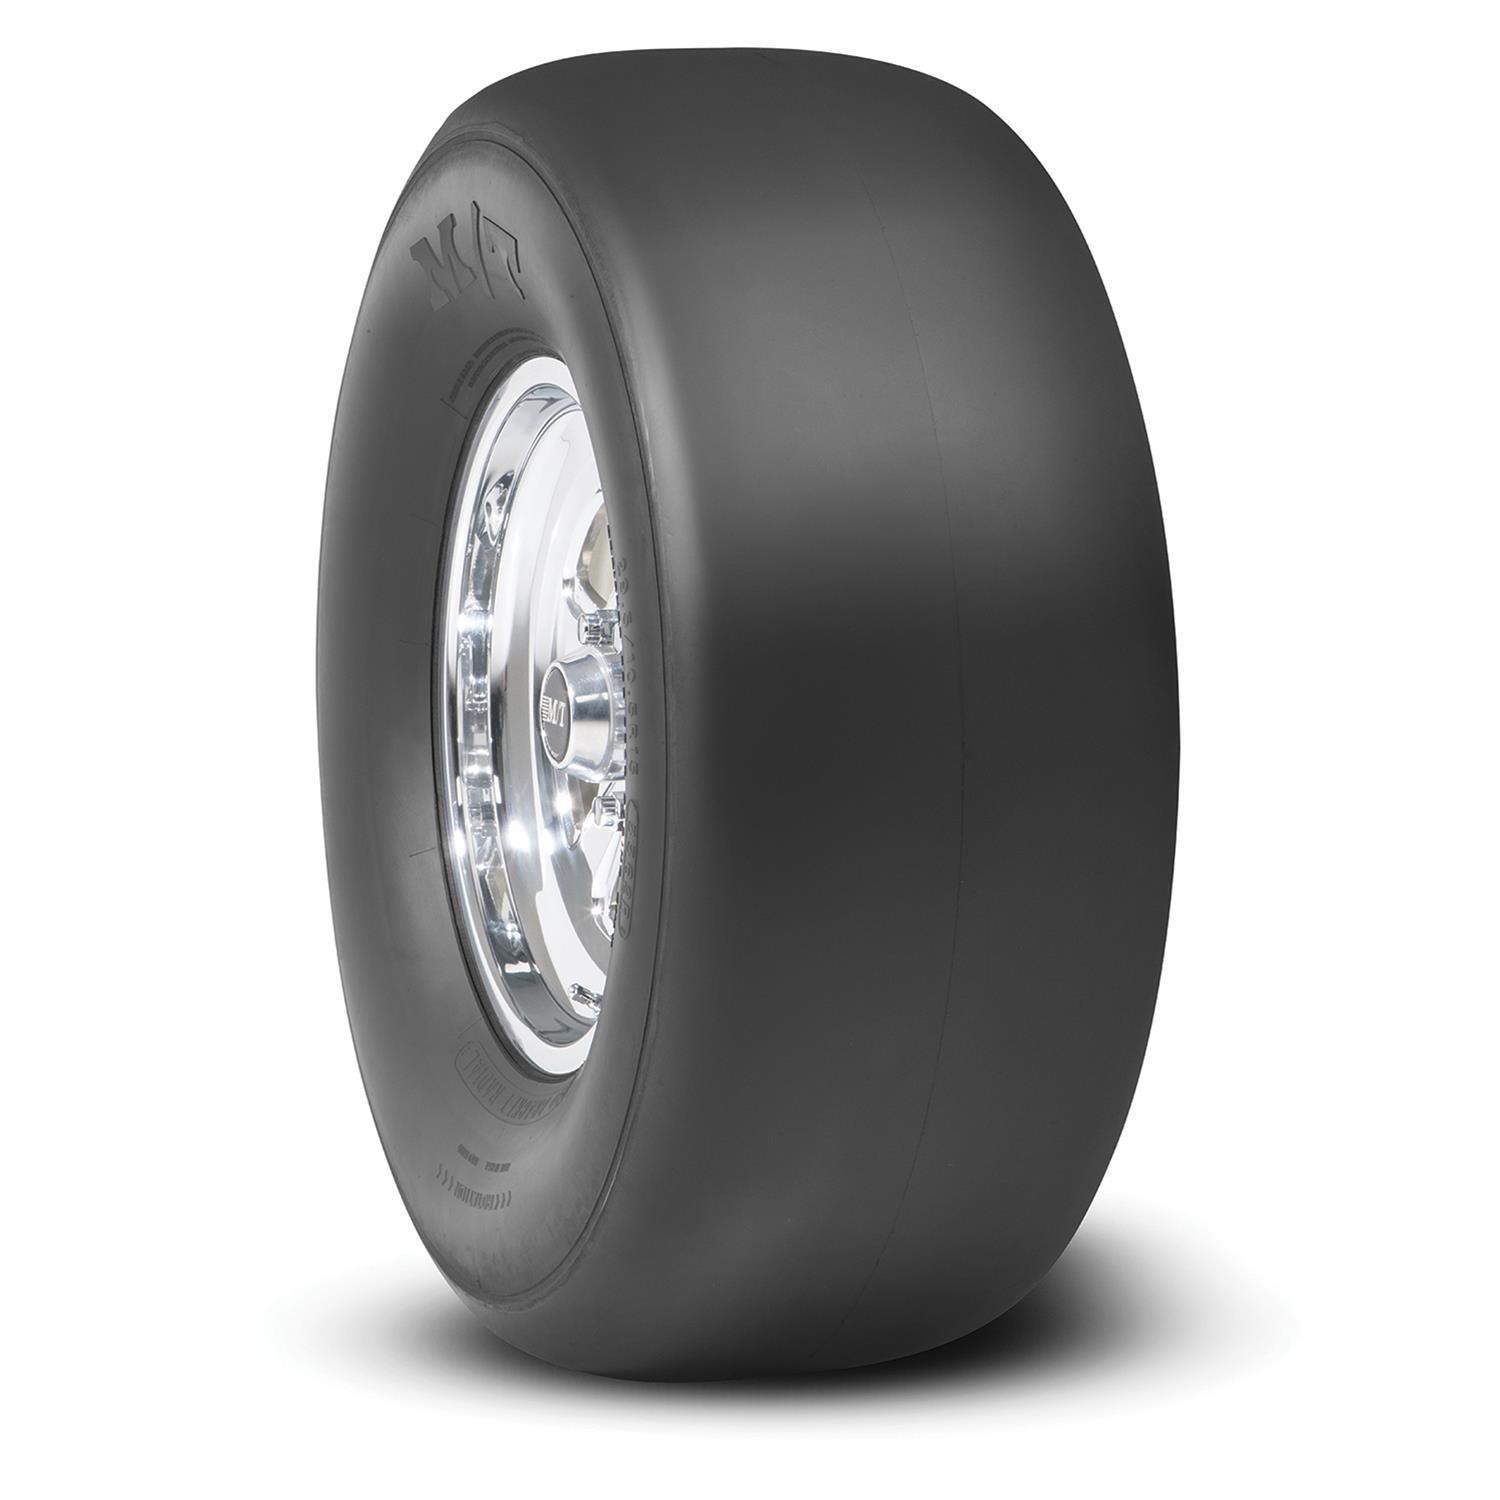 28.0/9.0R15x5 Drag Pro Bracket Radial Tire - Burlile Performance Products